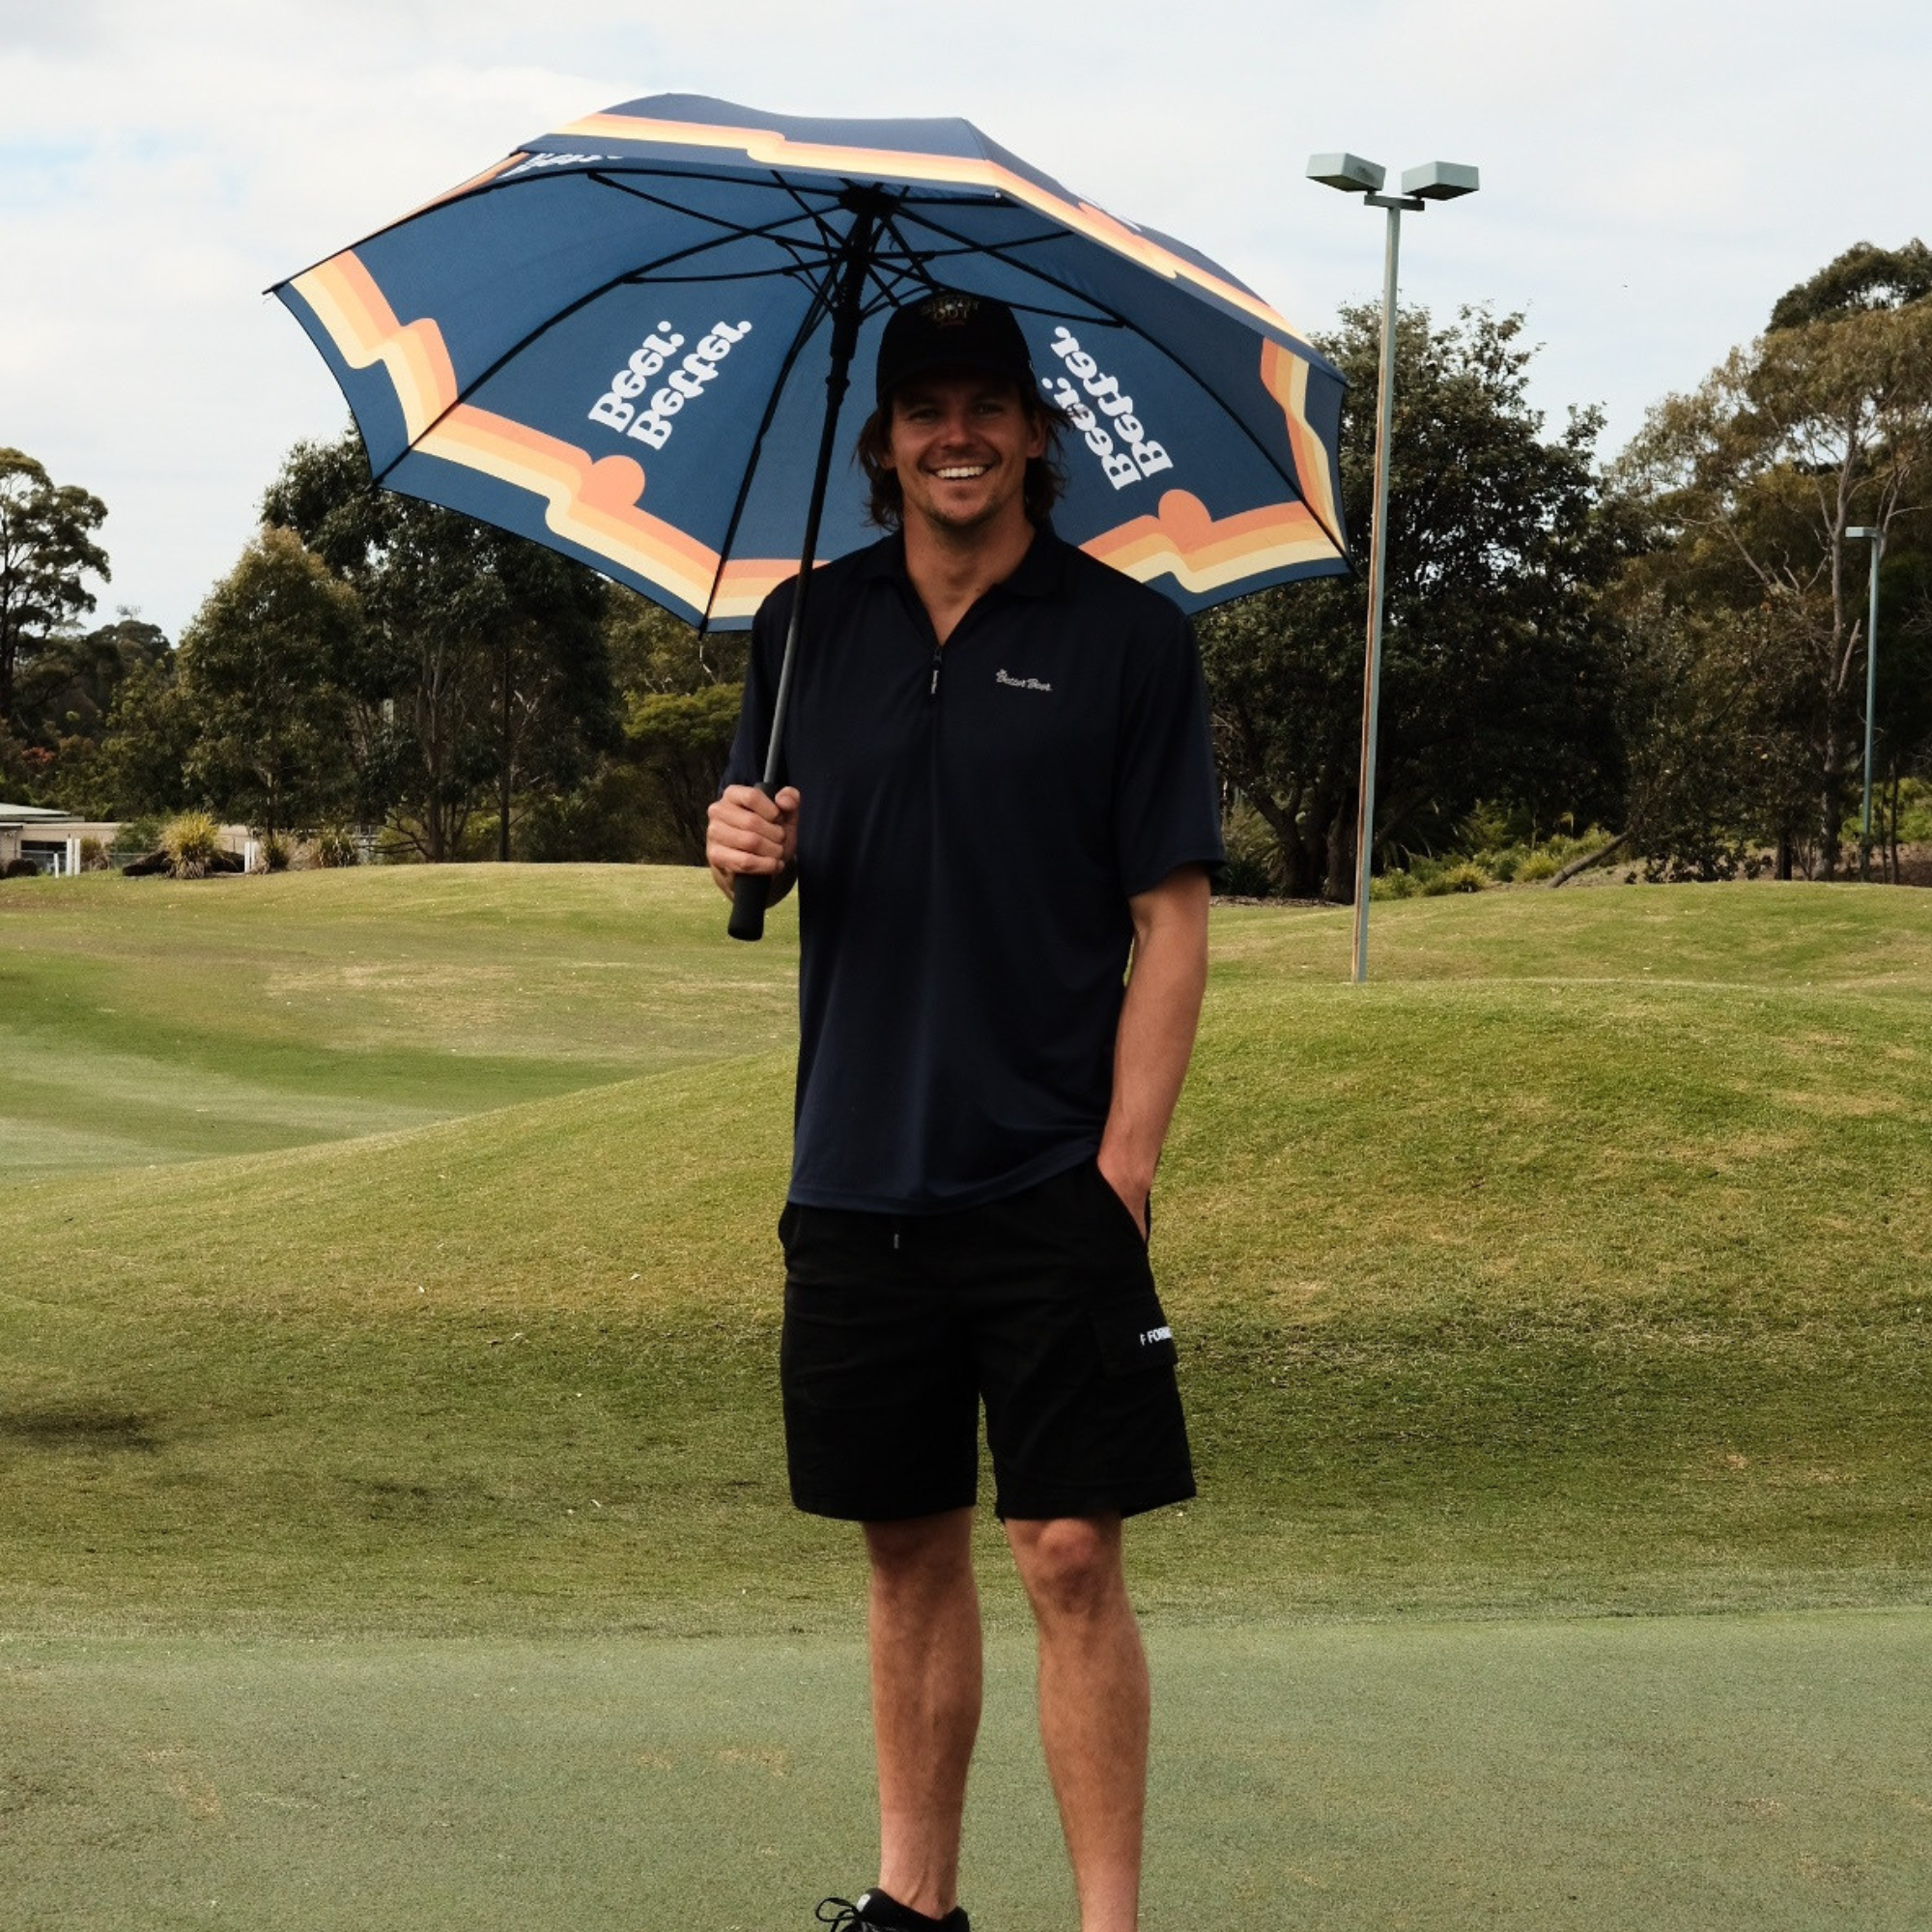 Better Beer Golf Umbrella